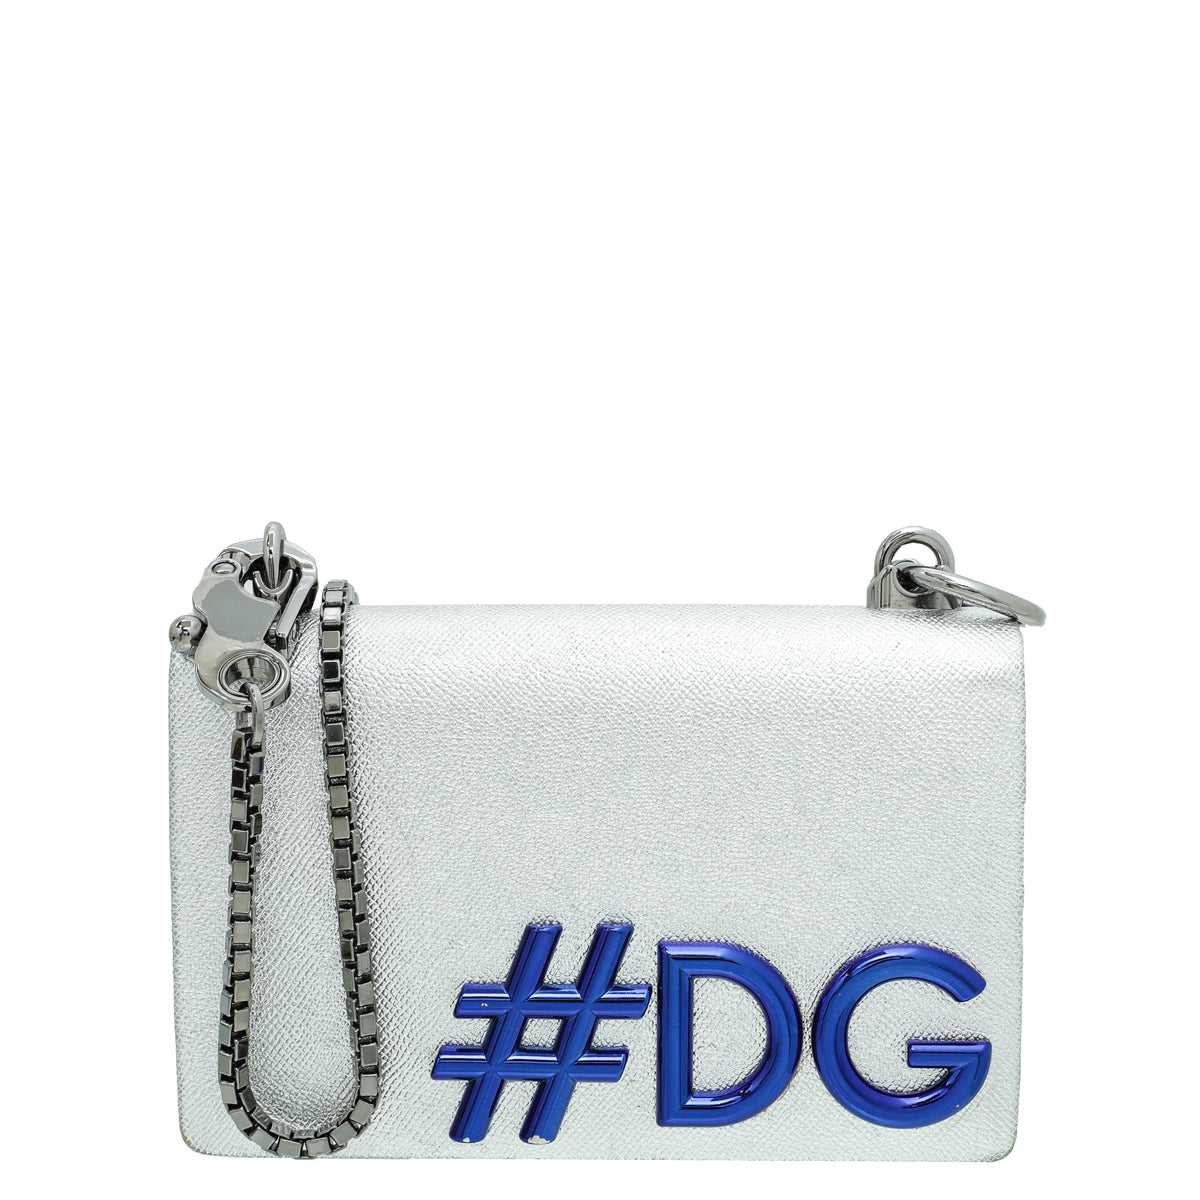 Dolce & Gabbana Metallic Silver DG Girls Hashtag Logo Metallic Chain Flap Bag